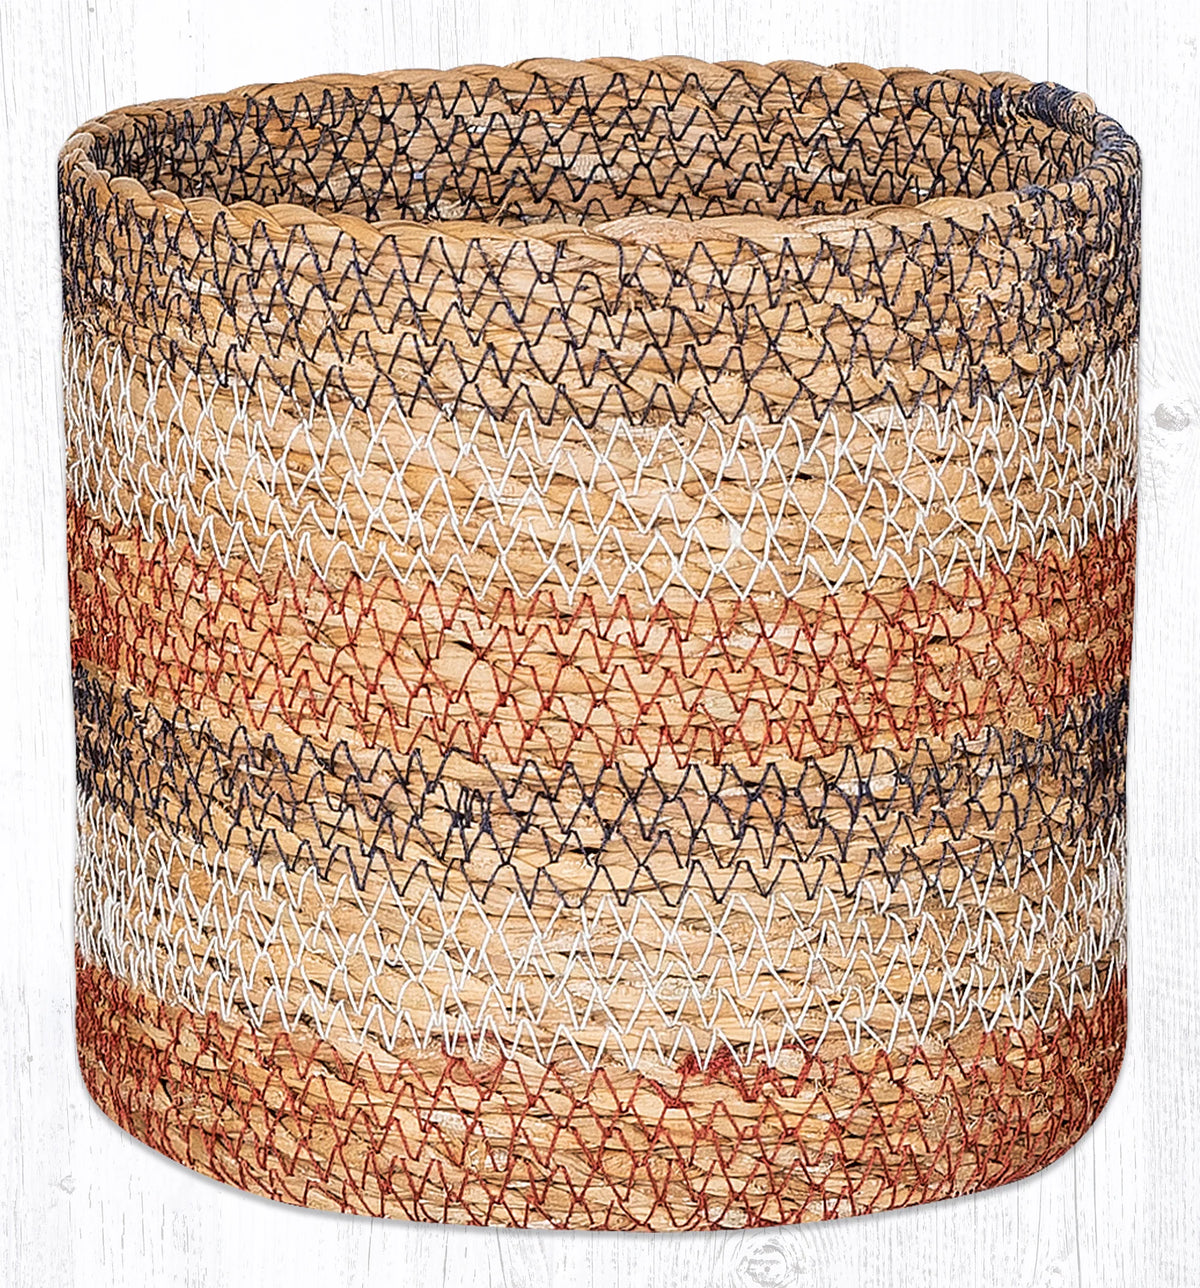 Honeycomb Sedge Grass Basket Collection SGB-02